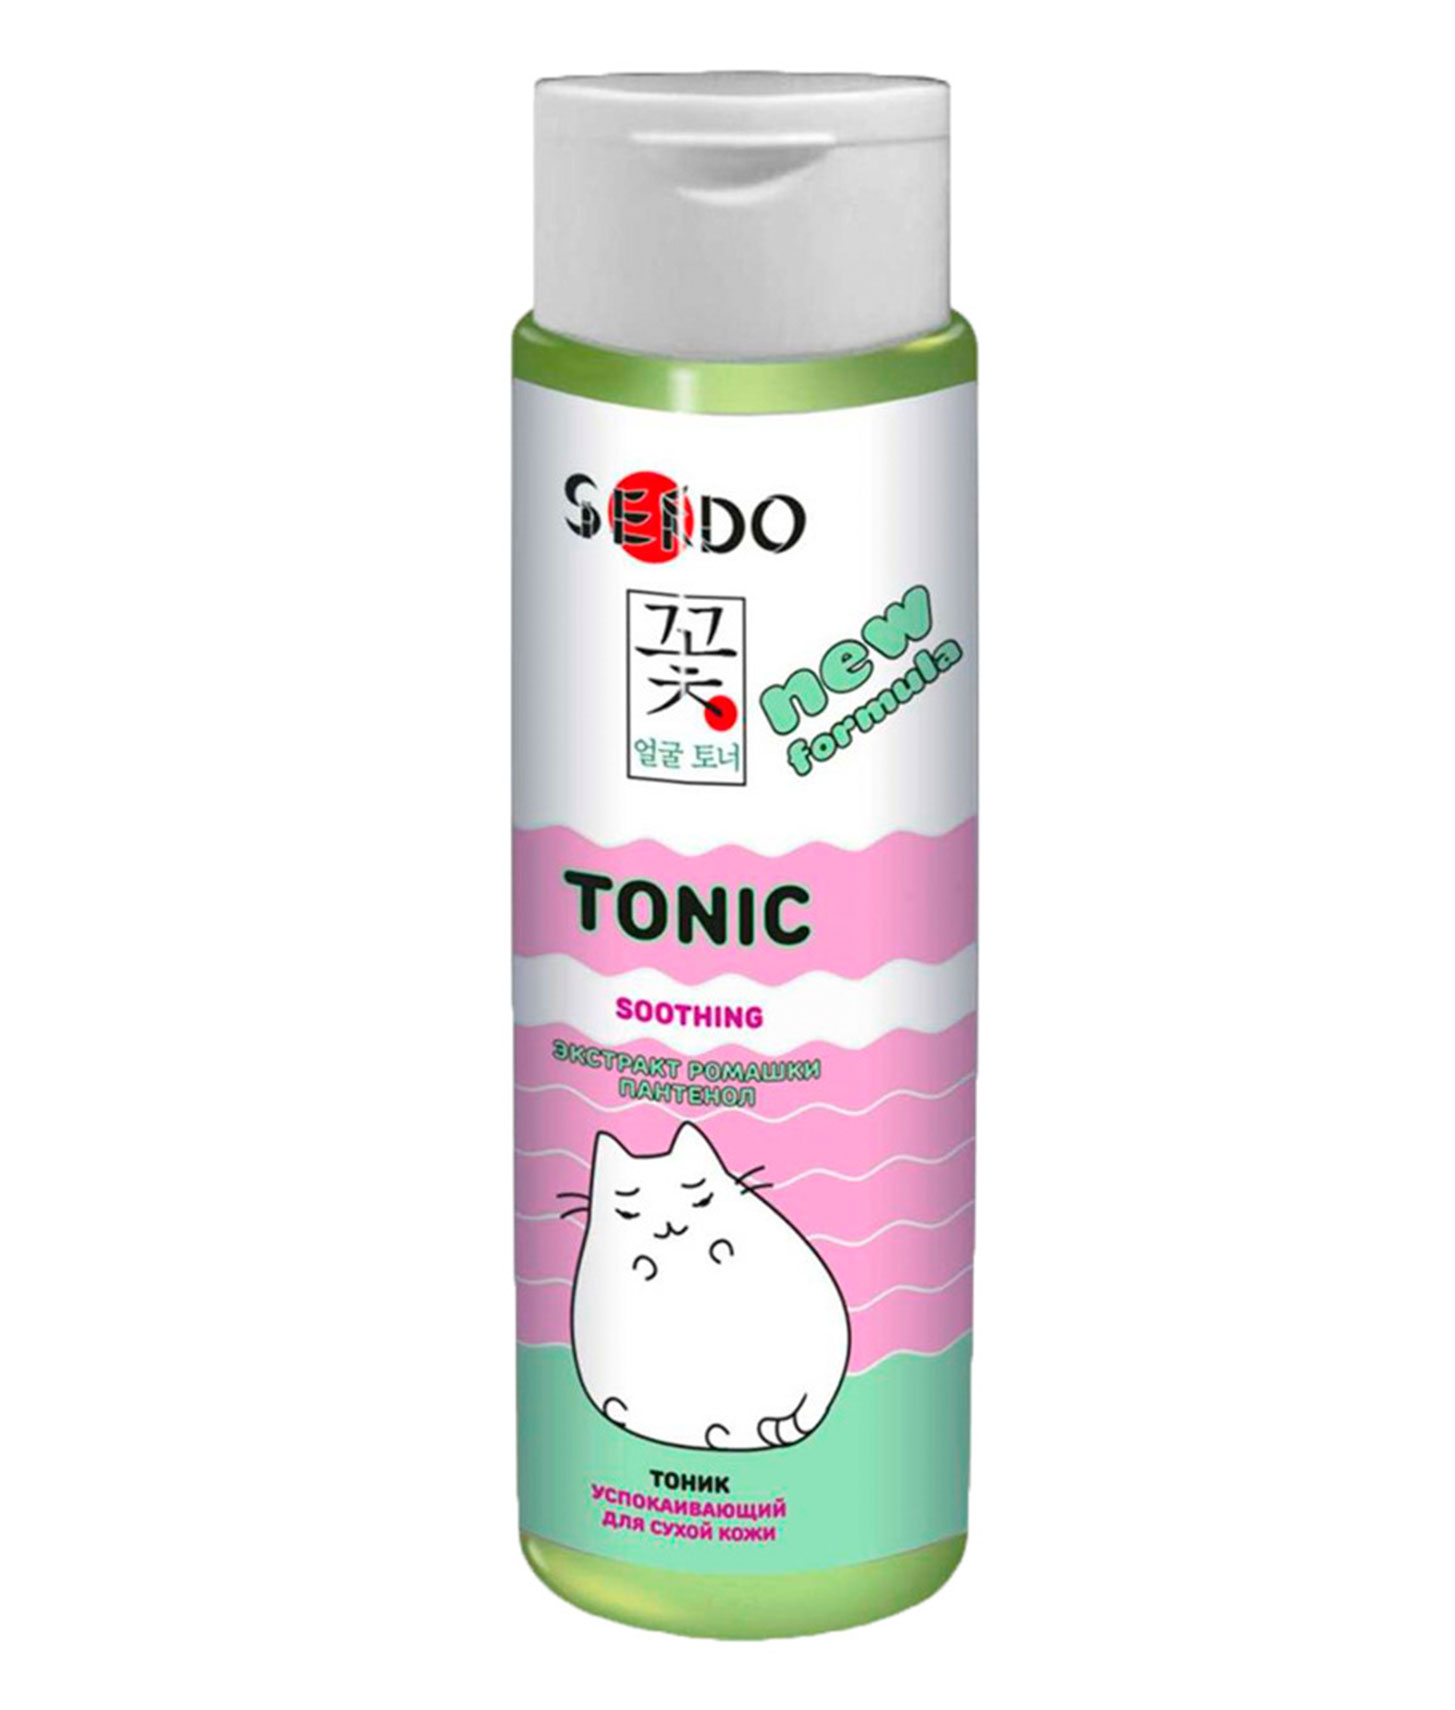 Тоник «Sendo» для сухой кожи